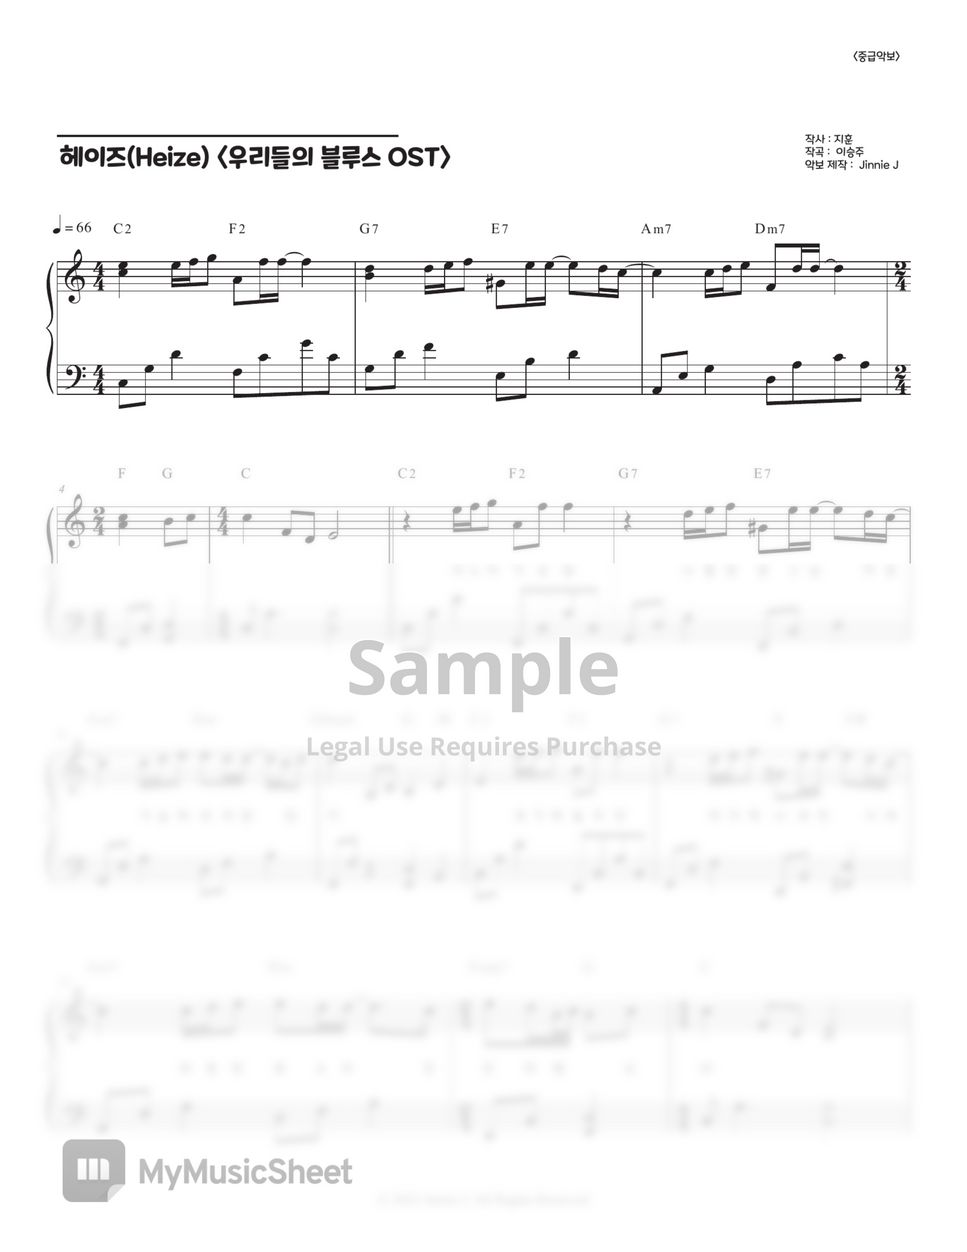 Heize - The Last (Our Blues OST) (Intermediate (Db, C key)) by Jinnie J